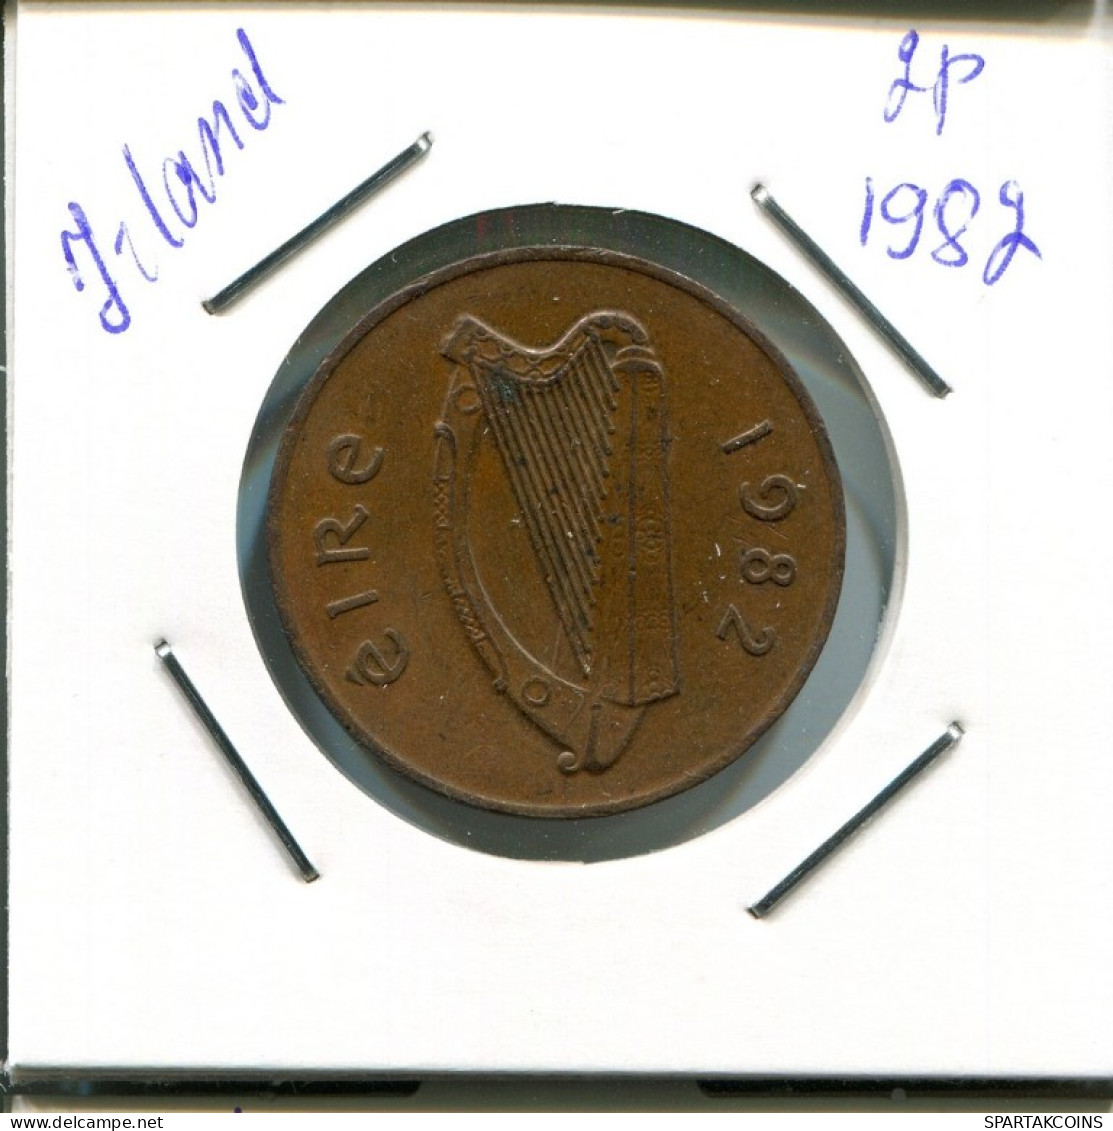 2 PENCE 1982 IRLANDA IRELAND Moneda #AN621.E.A - Ireland